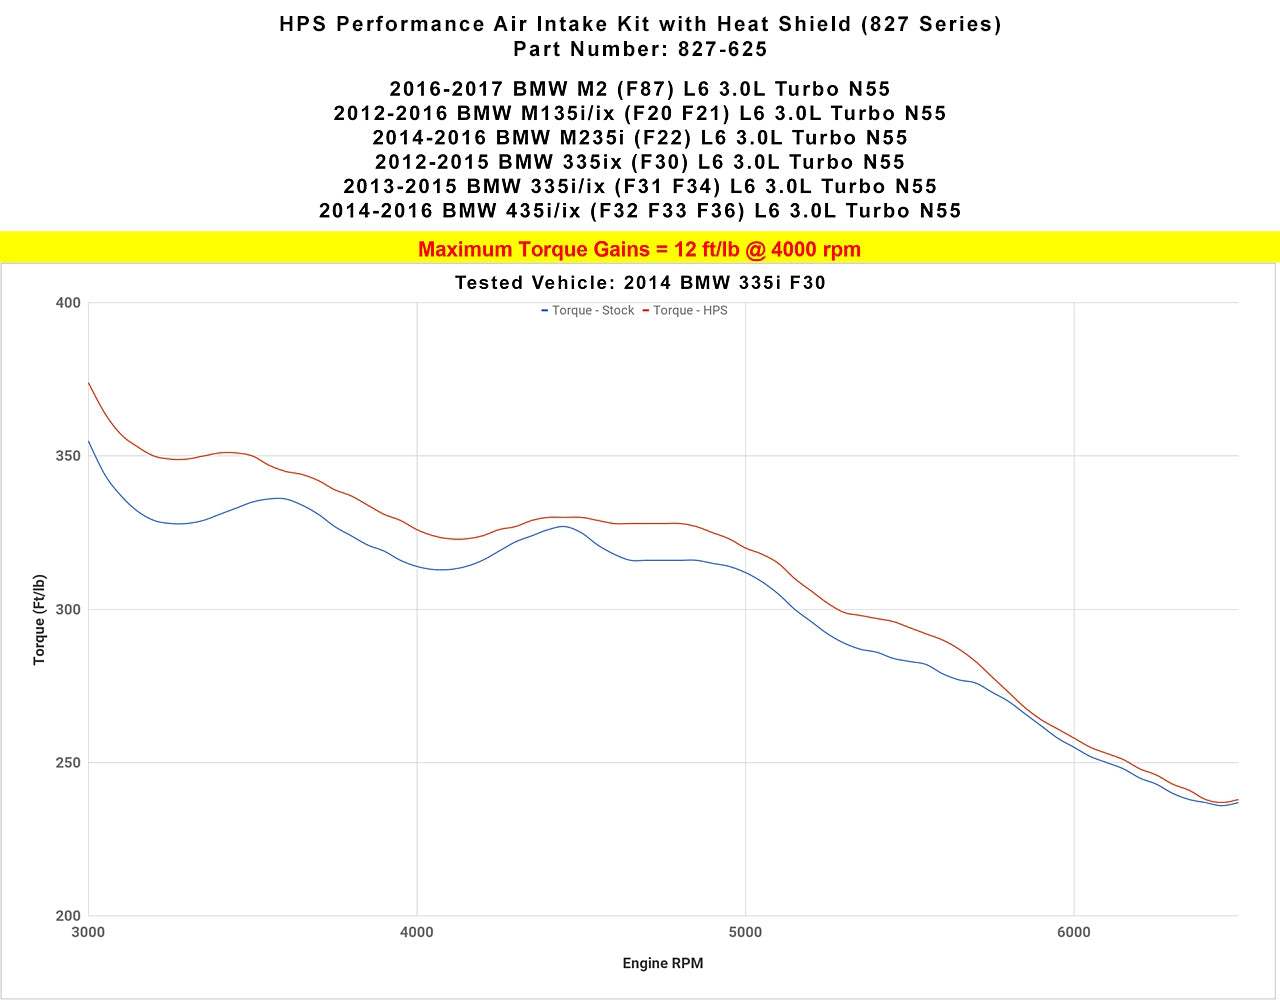 Dyno proven gains 12 ft/lb HPS Performance Shortram Air Intake Kit 2012-2015 BMW 335ix F30 3.0L Turbo N55 827-625WB